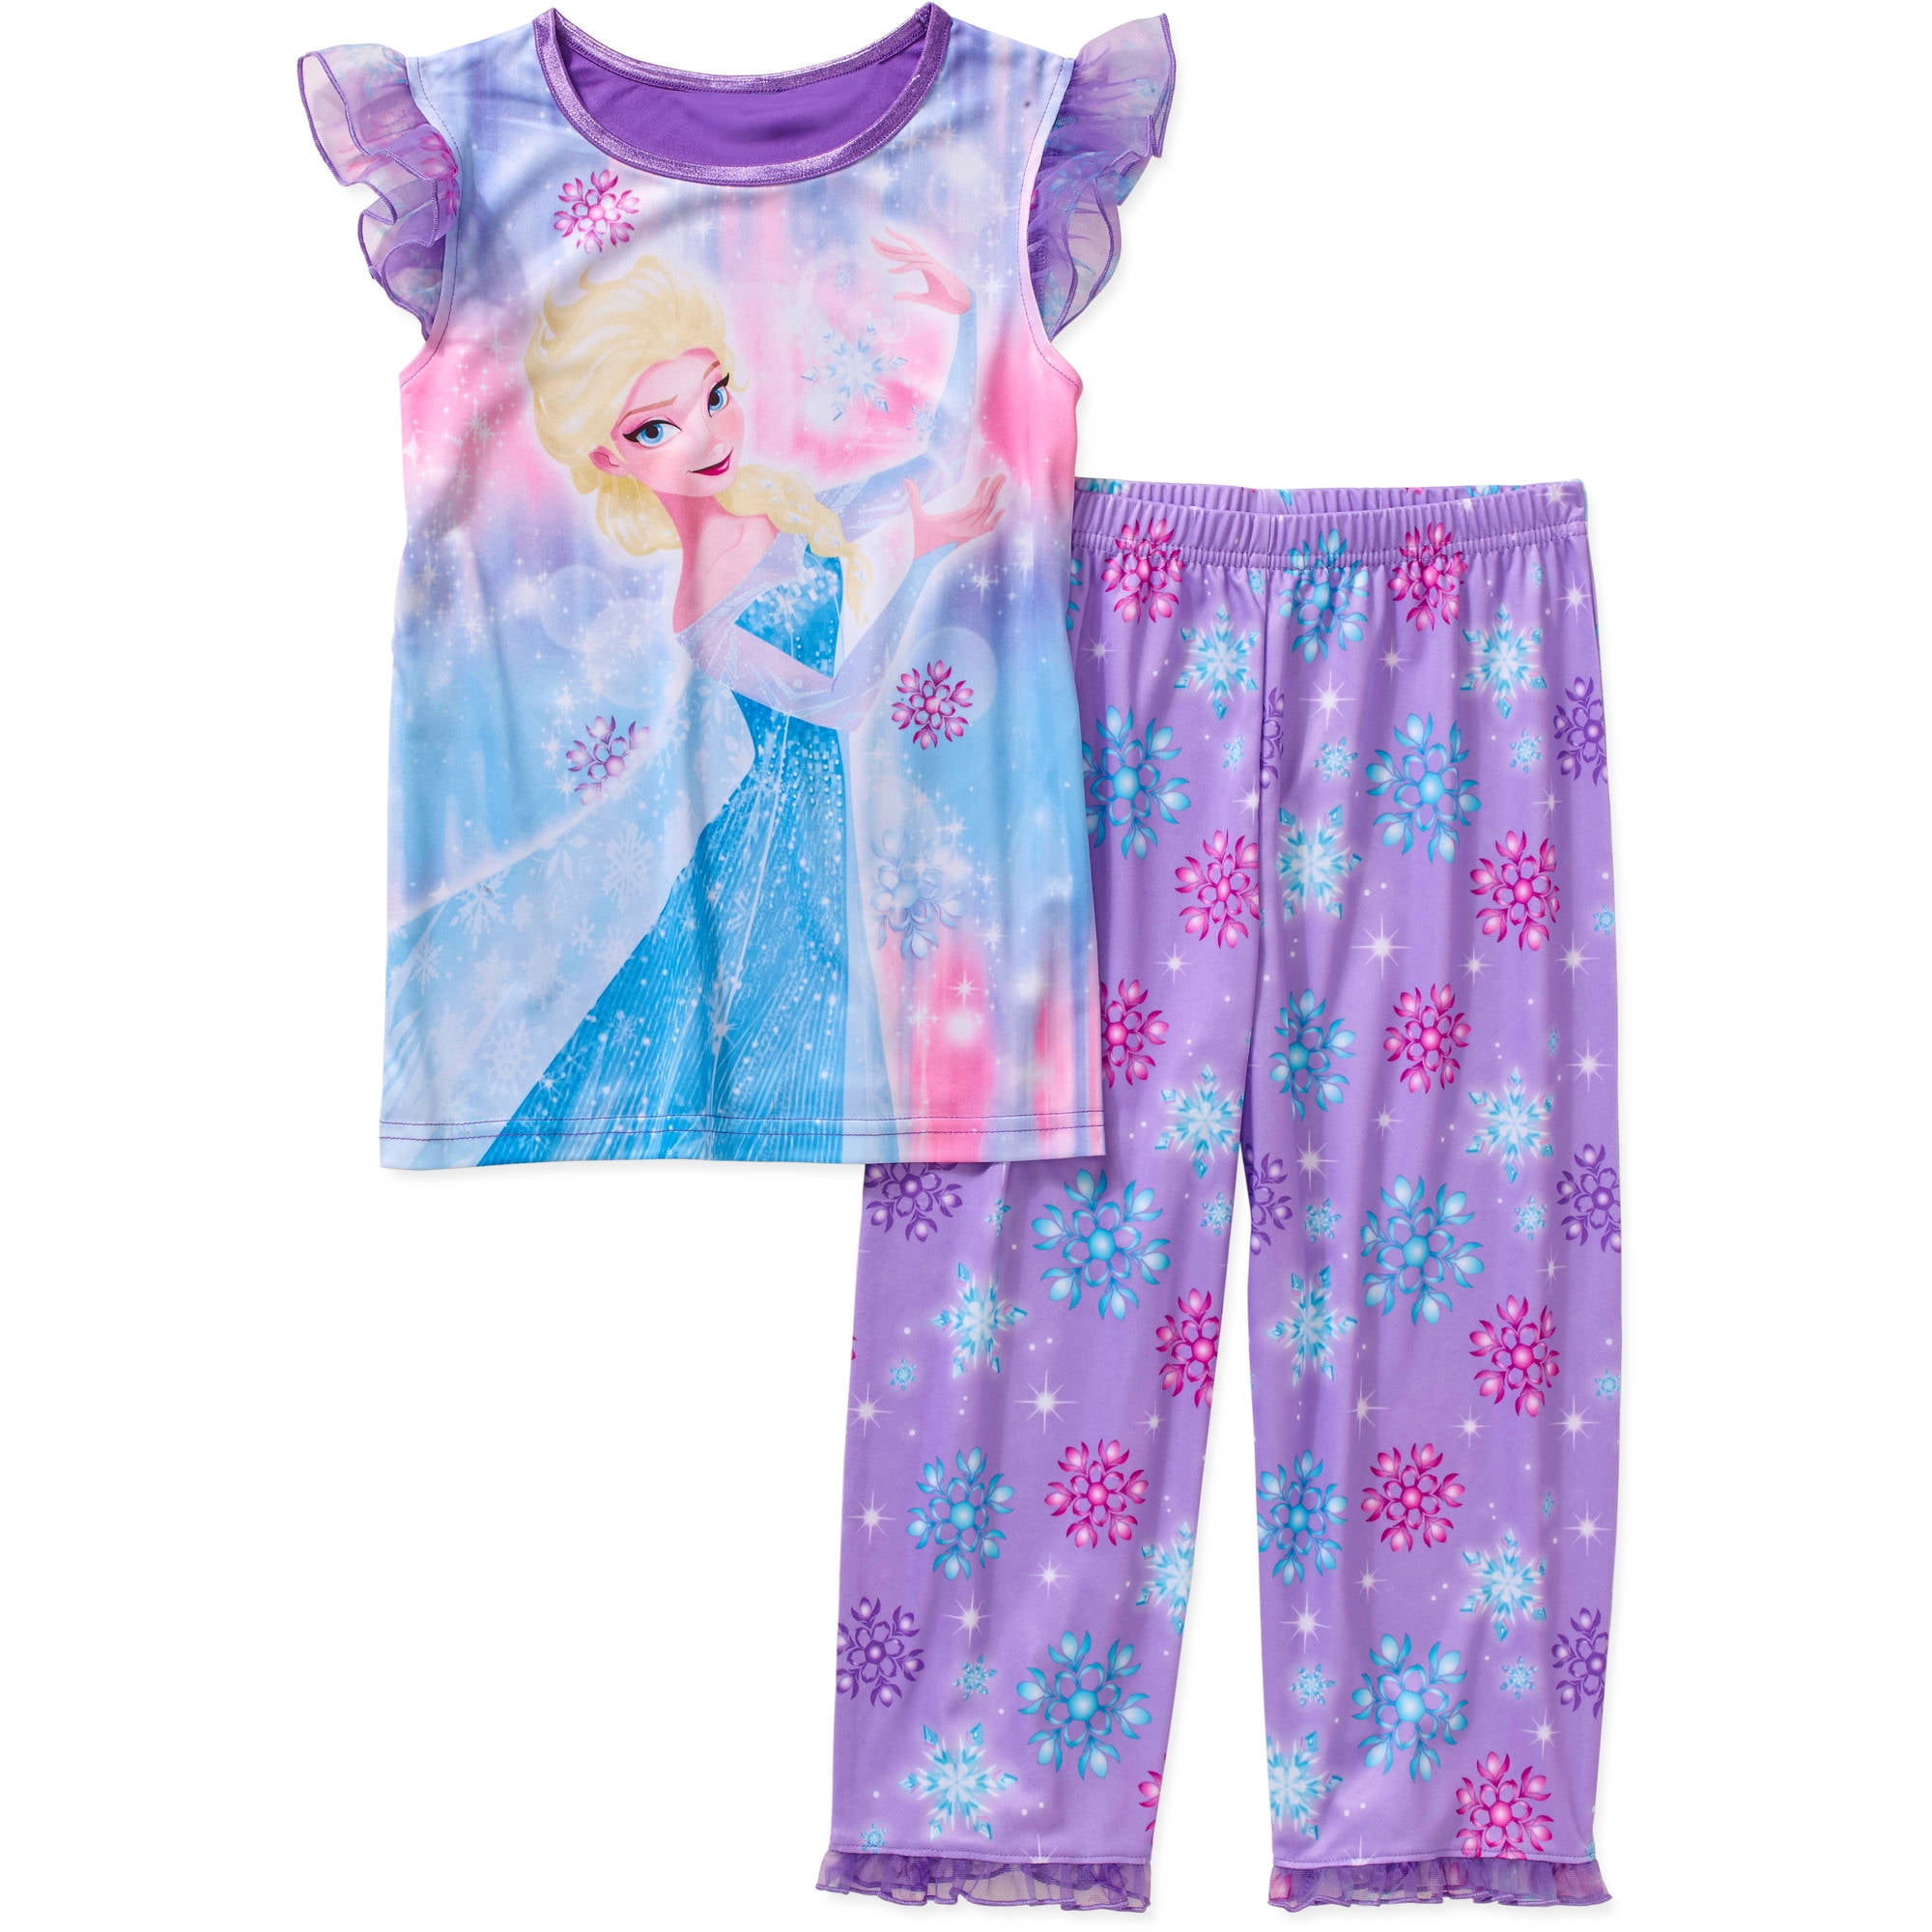 Girls' Sleepwear - Walmart.com